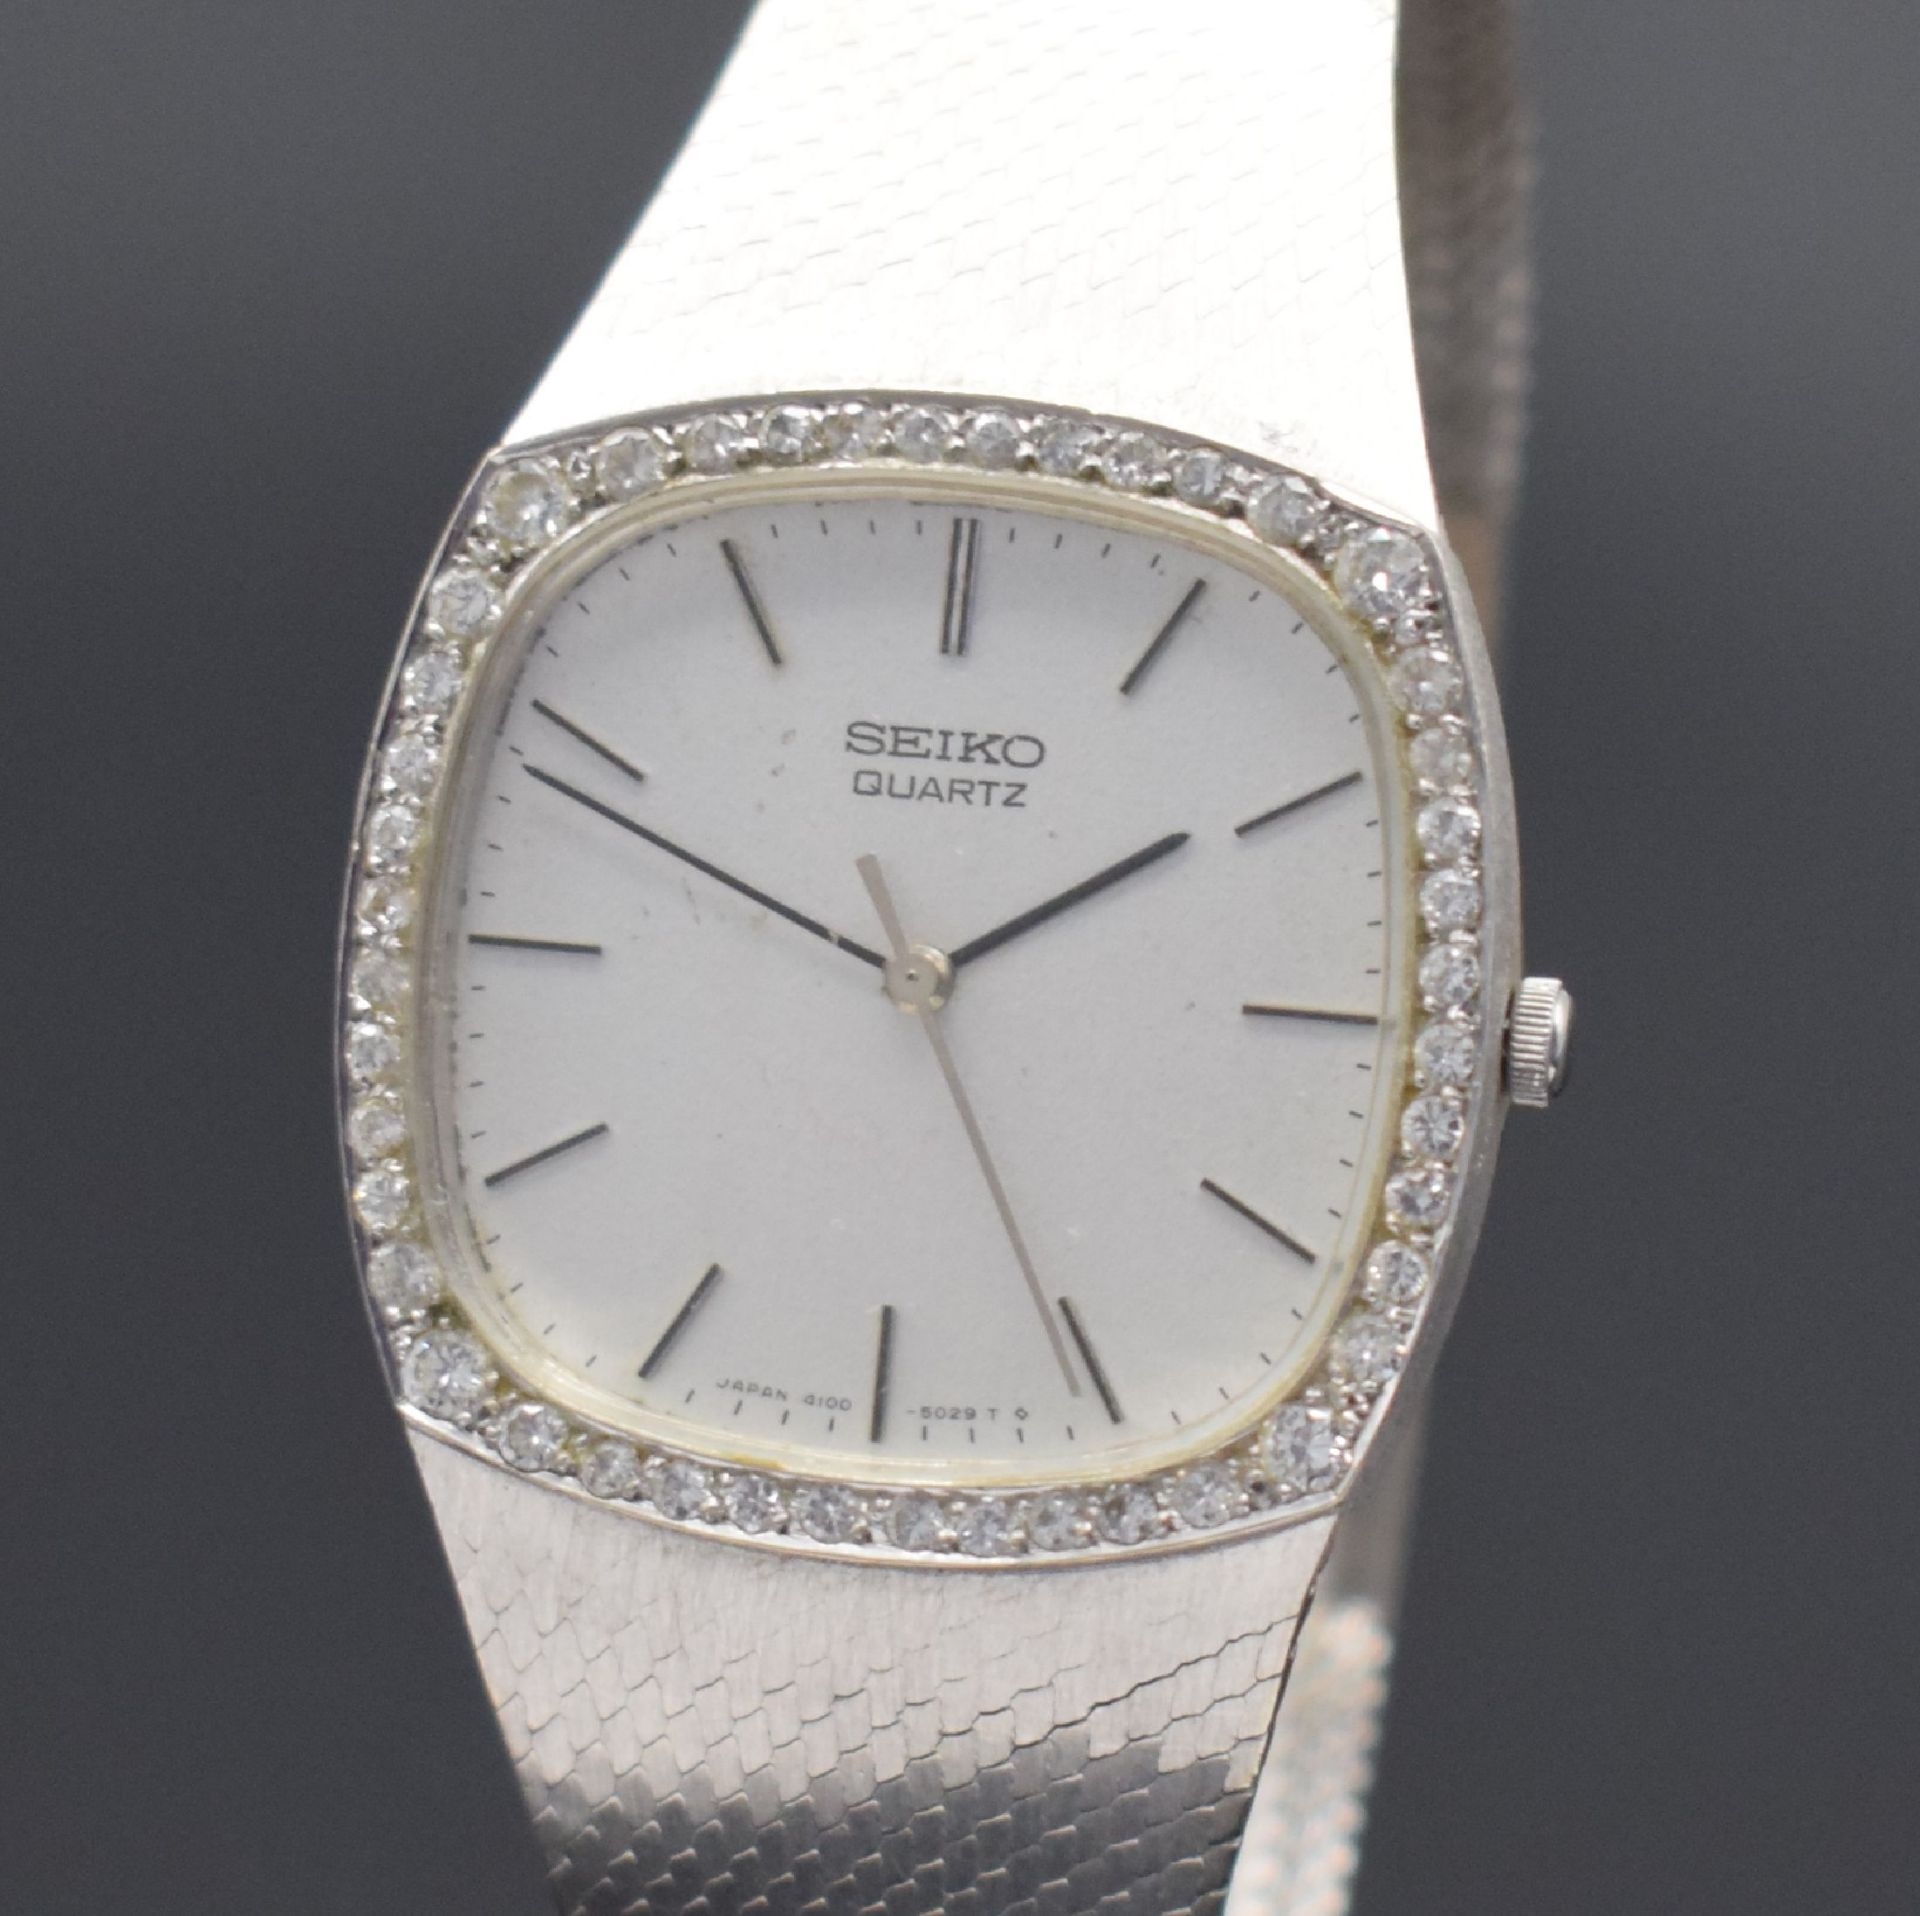 SEIKO Armbanduhr in WG 585/000, Japan 1970er Jahre, - Image 2 of 4